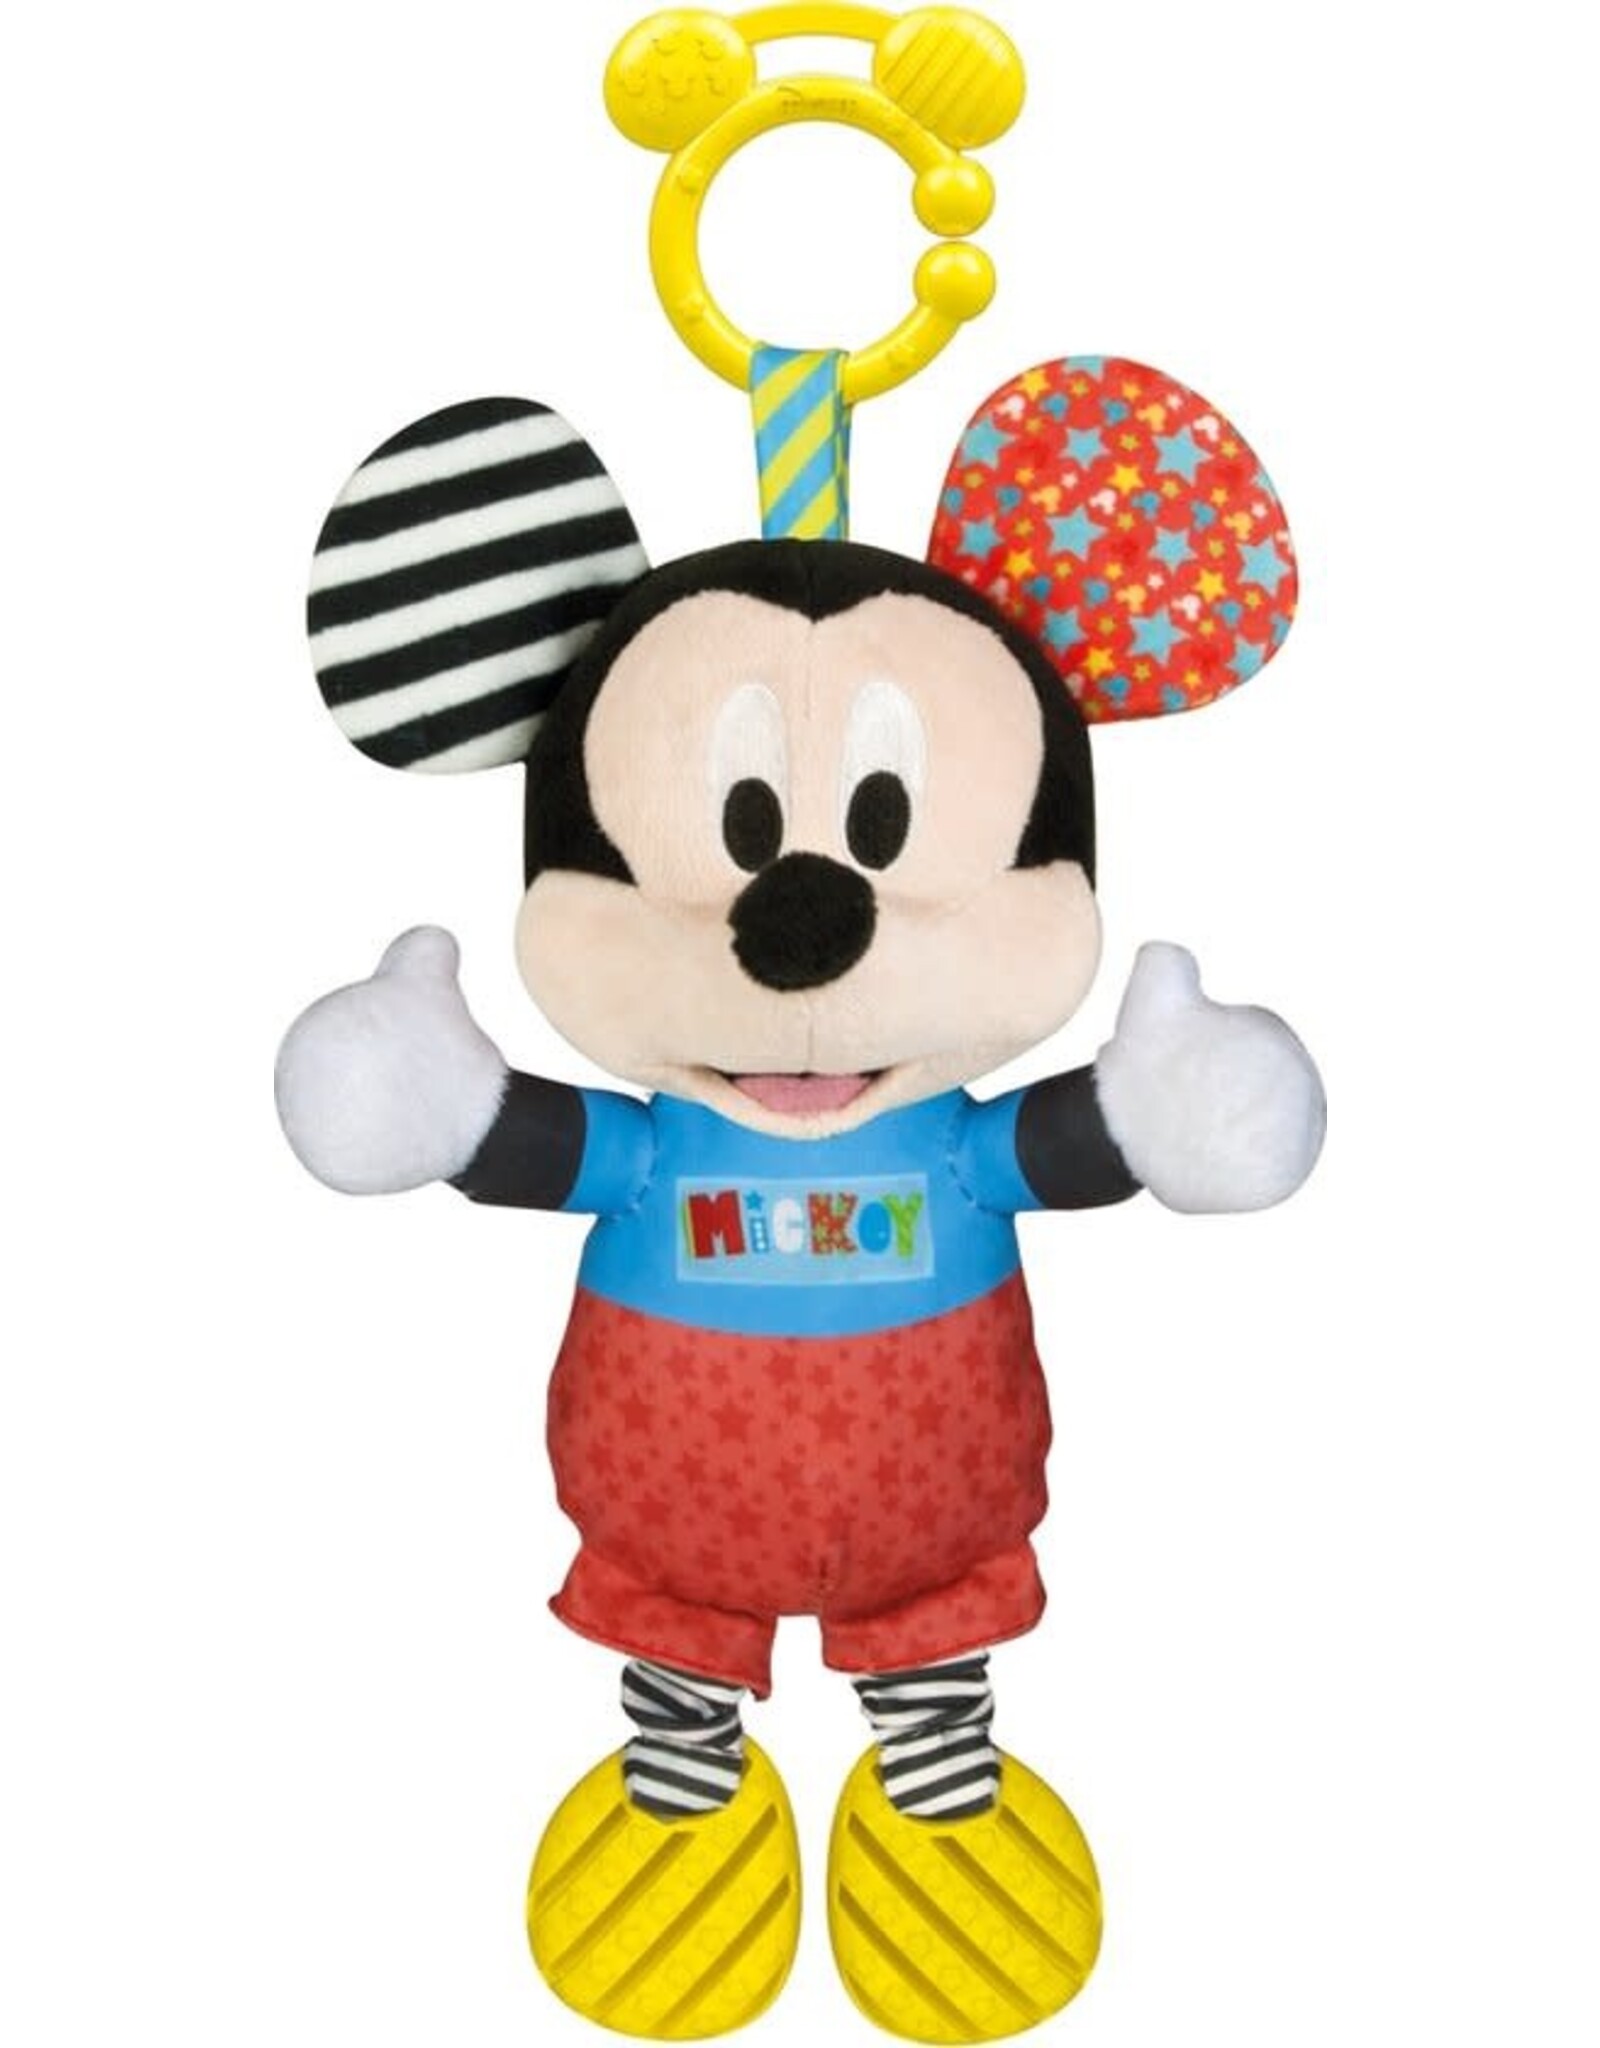 CLEMENTONI Clementoni Disney baby Mickey pluche knuffel